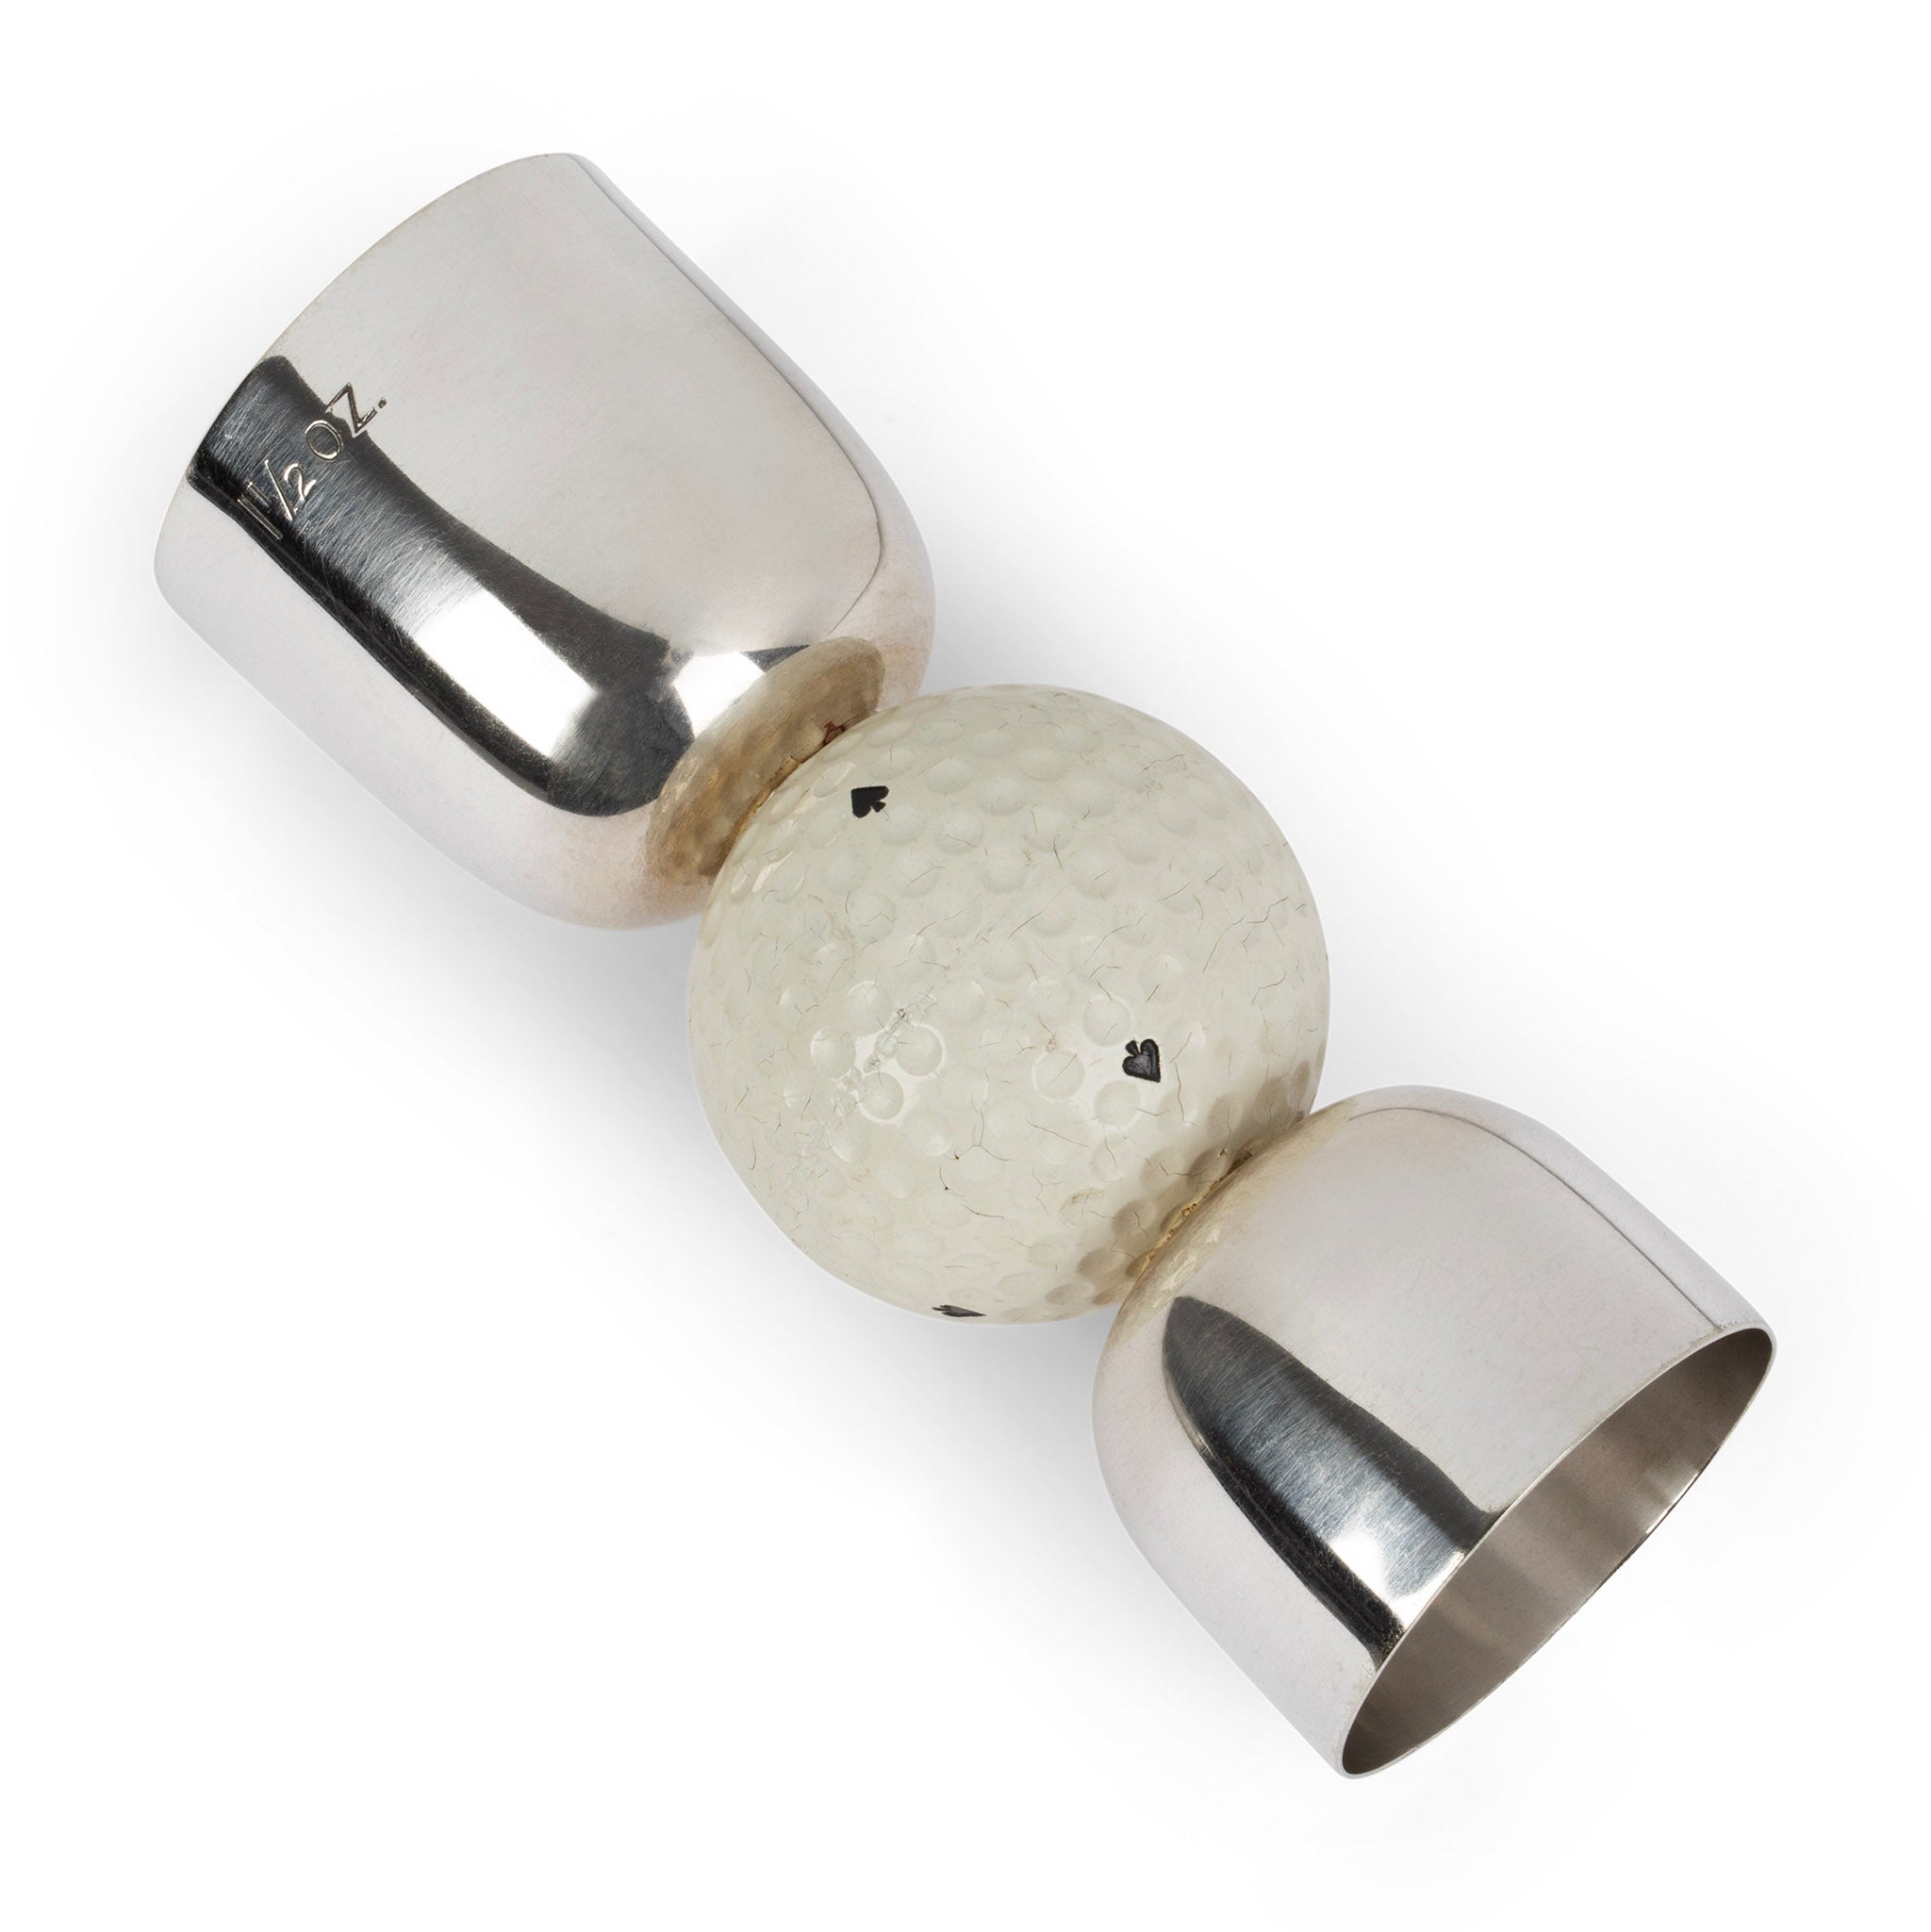 Midcentury Golf Ball Silver Double Spirits Measure Jigger